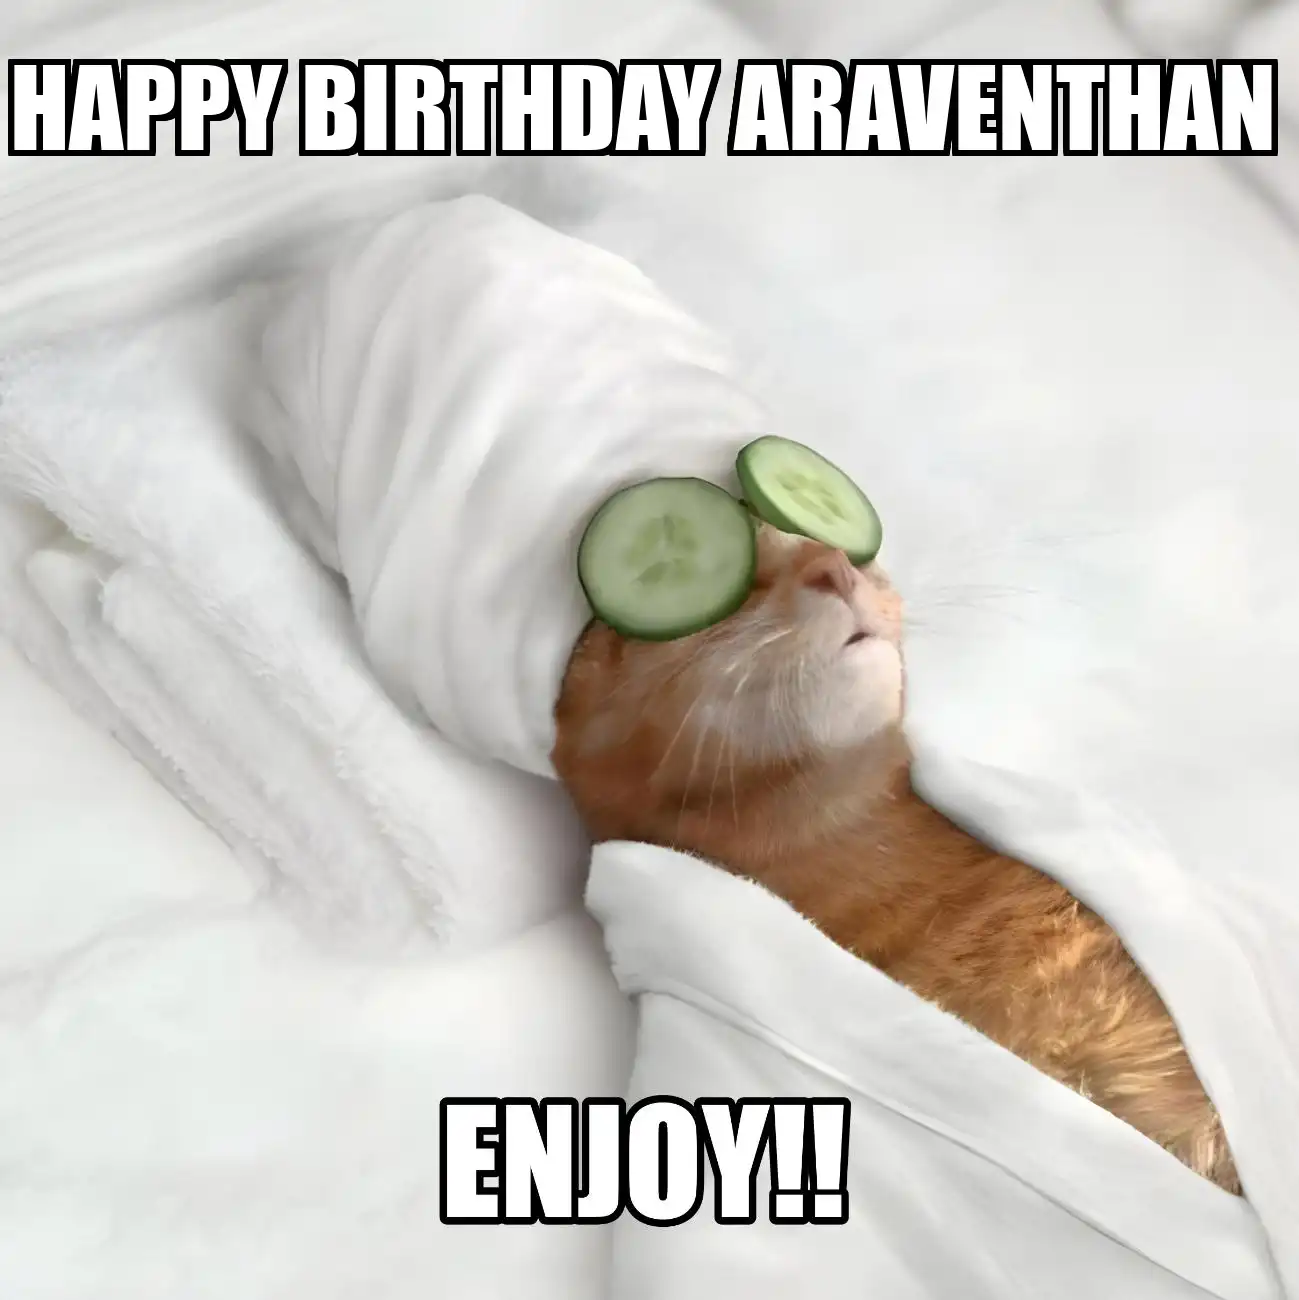 Happy Birthday Araventhan Enjoy Cat Meme